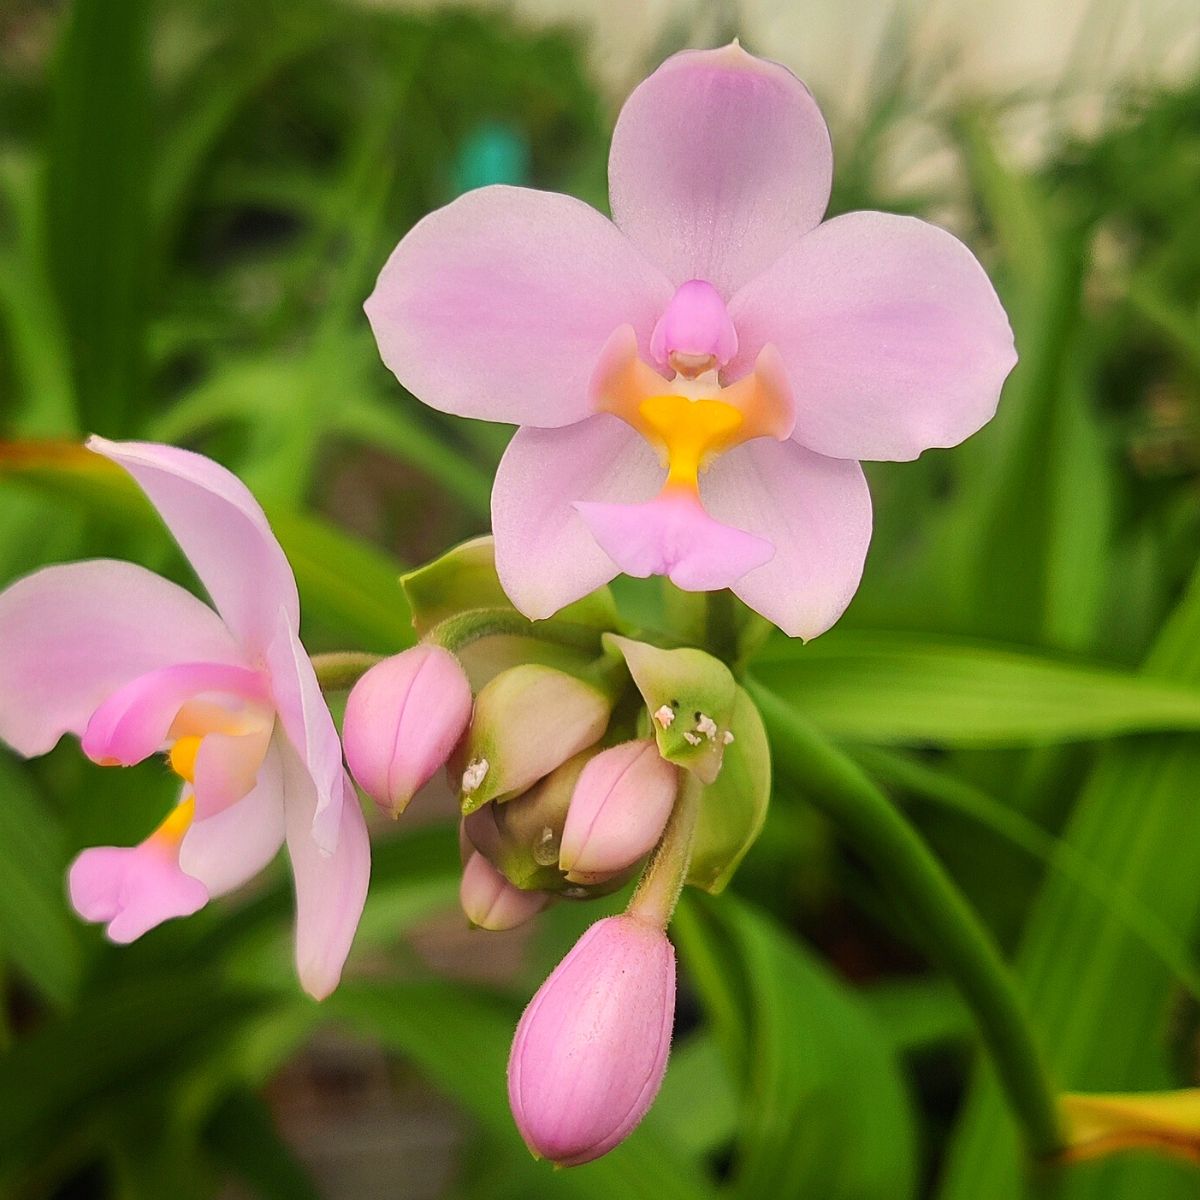 Spathoglottis Pink Princess Orchid - Stunning pink blooms of the Pink Princess Orchid